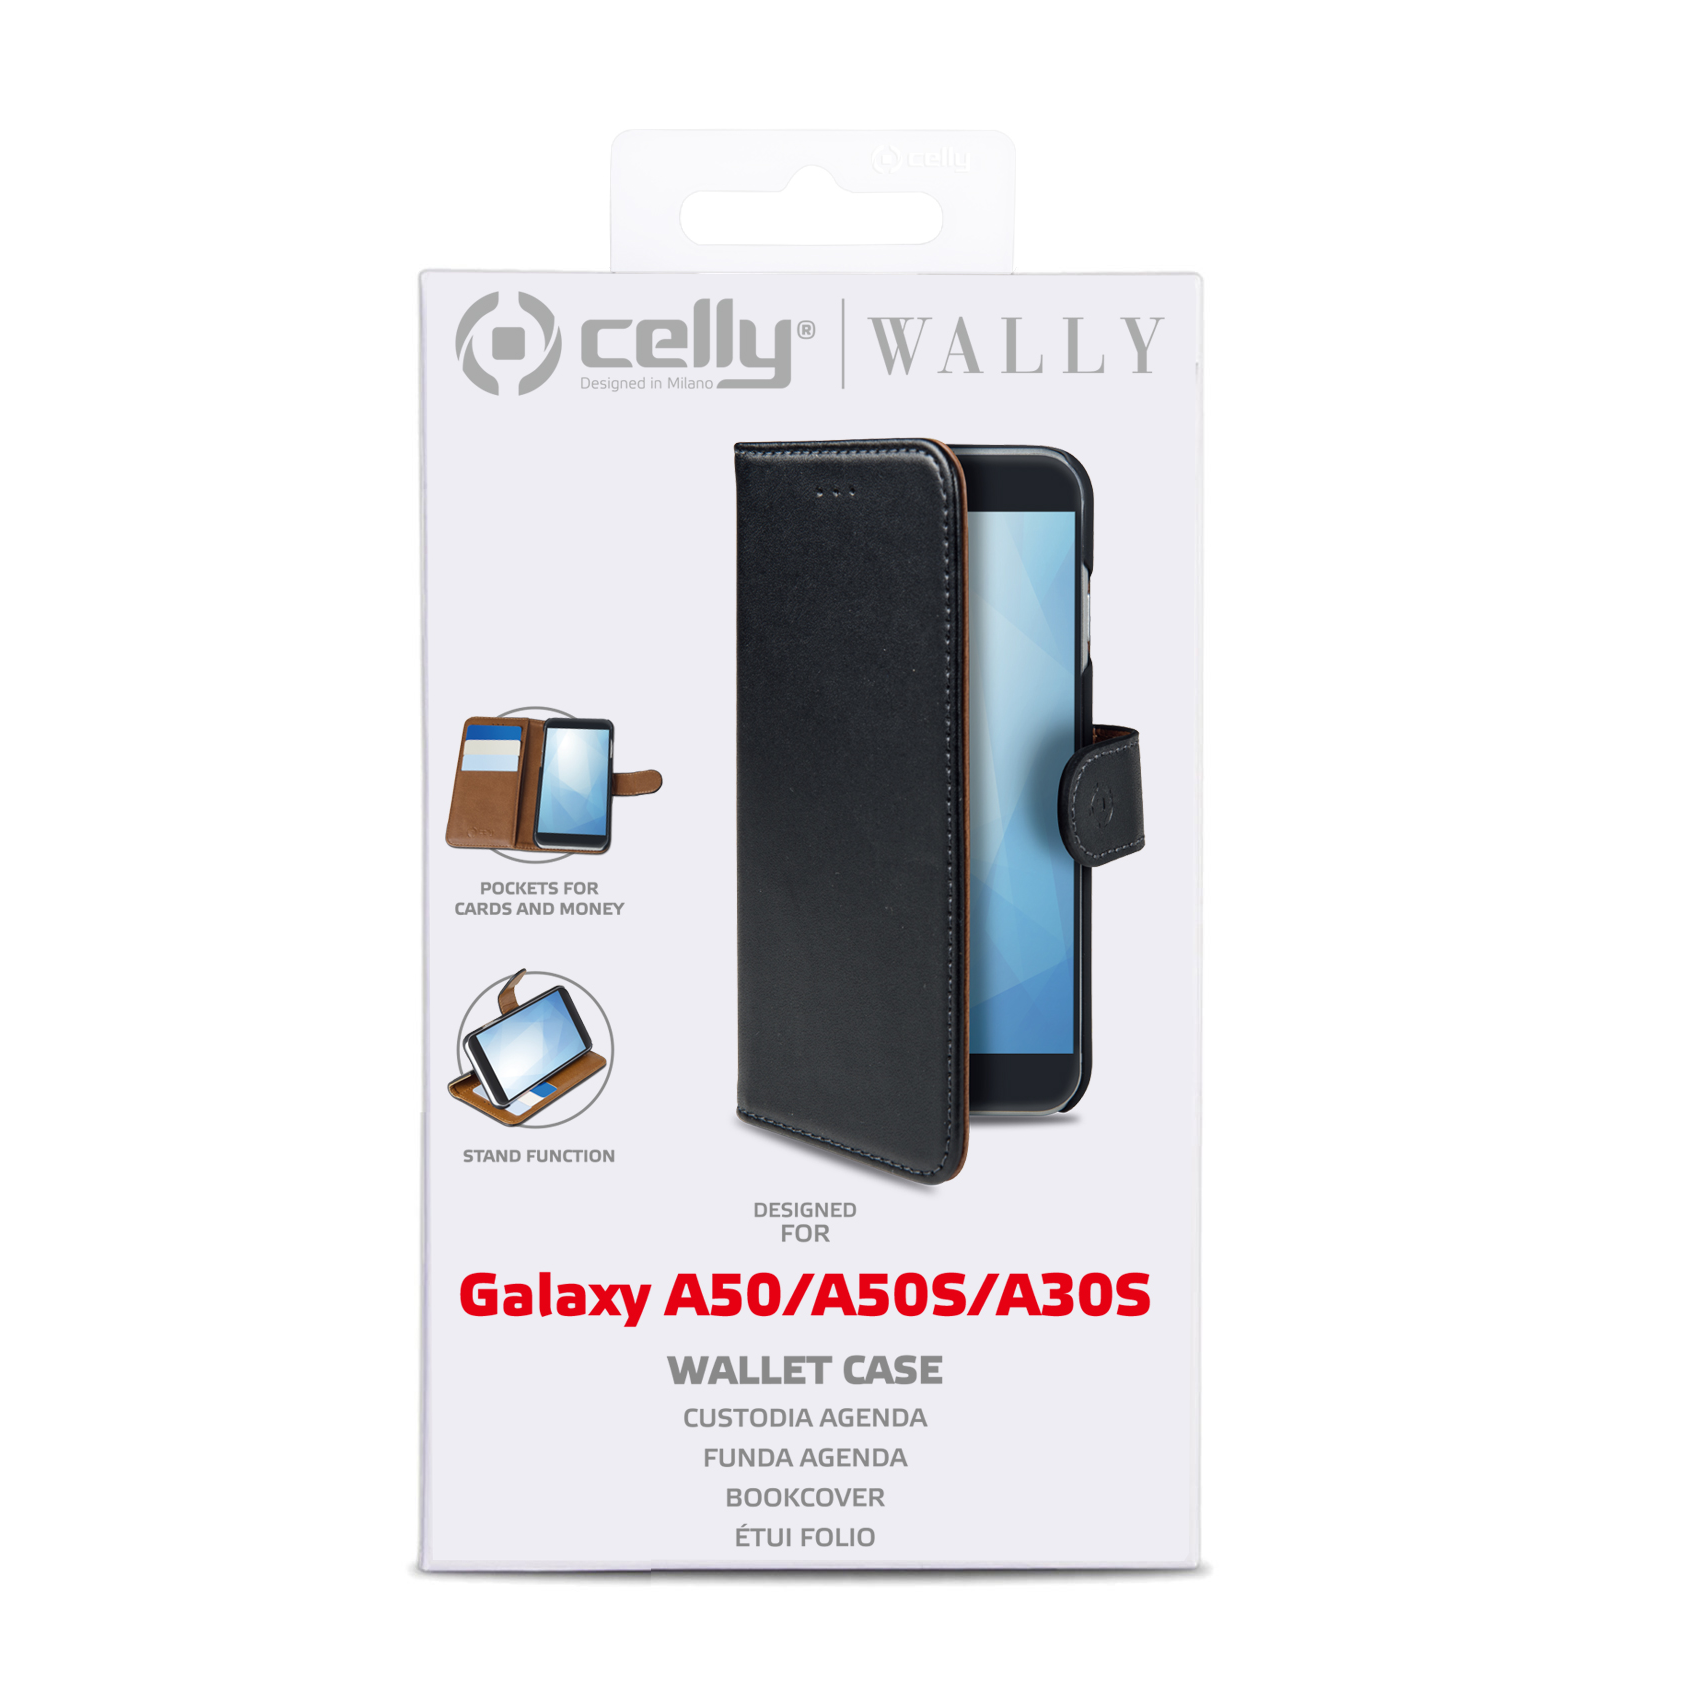 Celly WALLY CASE GALAXY A50/ Galaxy A50s/ Galaxy A30s